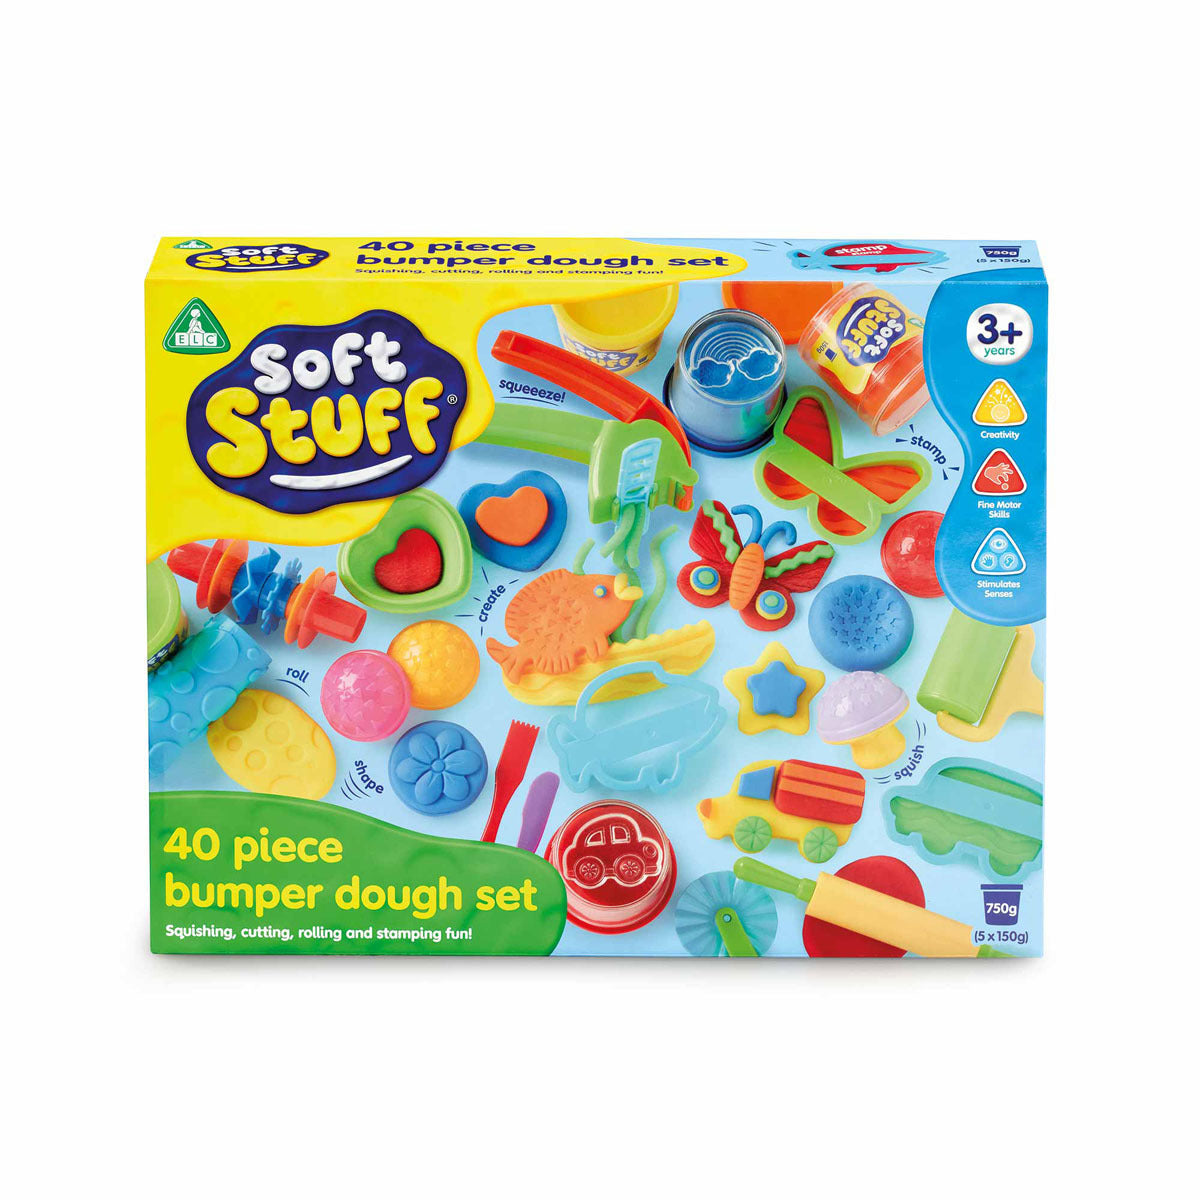 Soft Stuff 40 Piece Bumper Dough Set